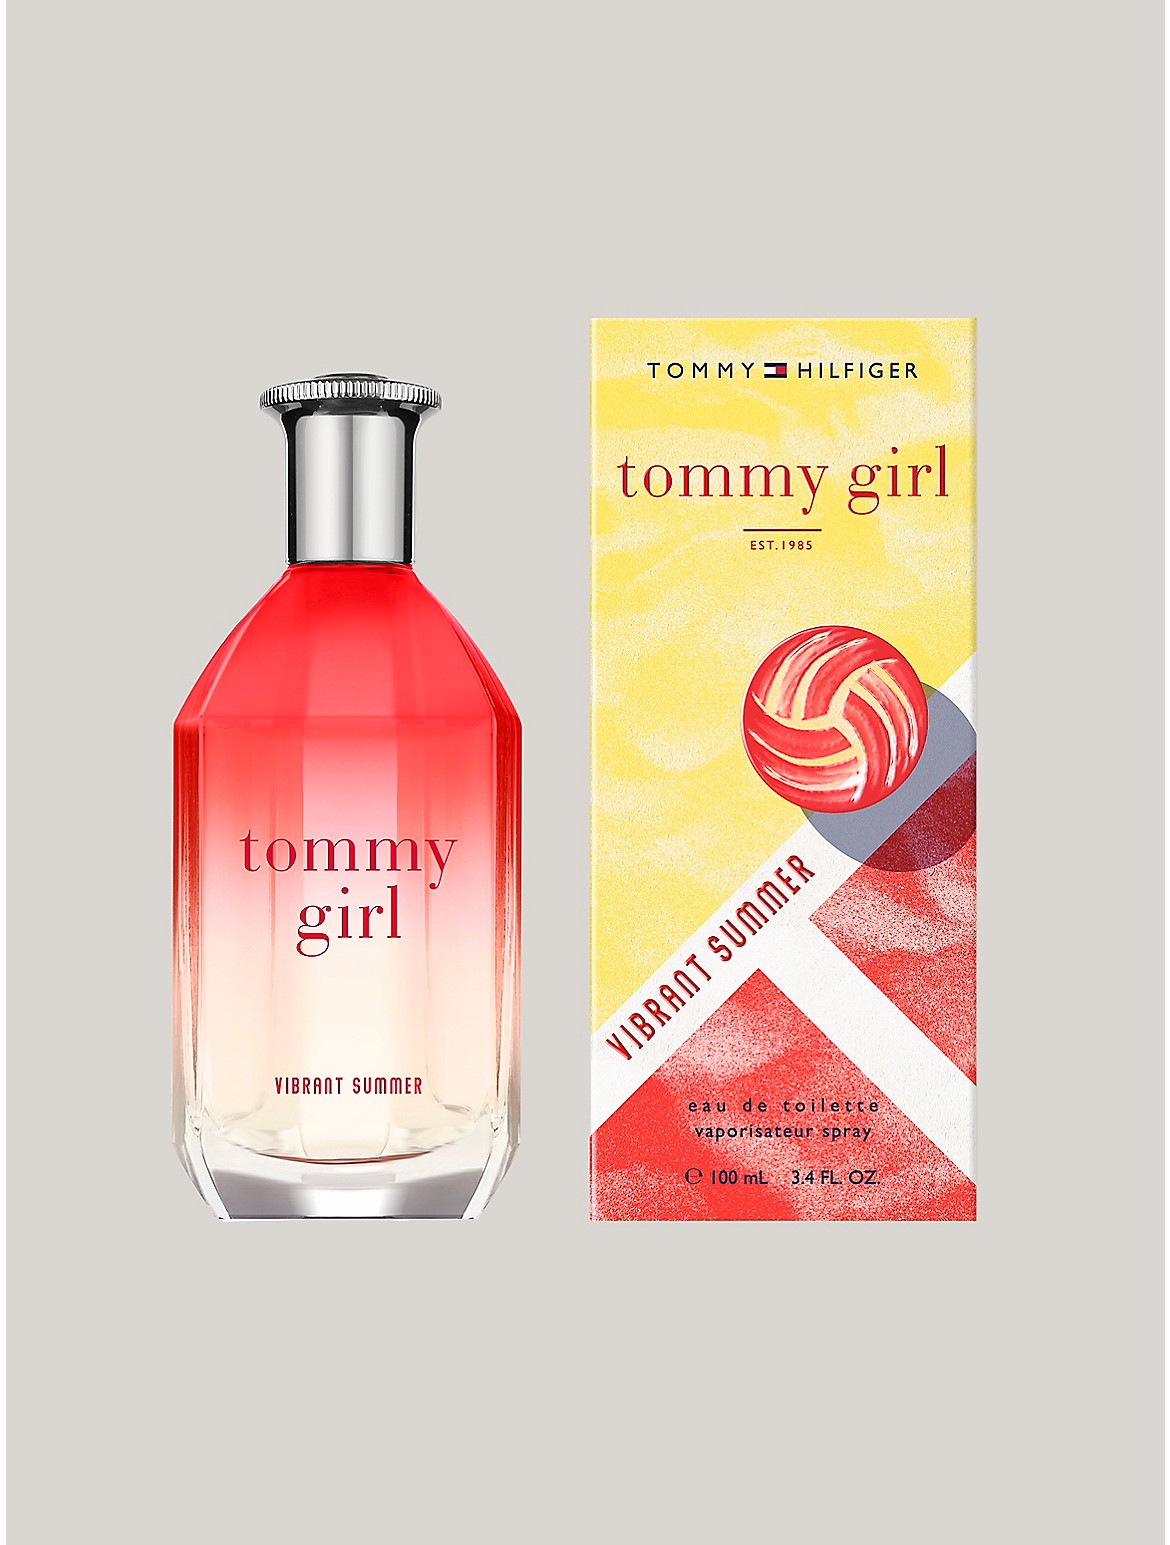 Tommy Hilfiger Women's Tommy Girl Vibrant Summer Fragrance 3.4oz